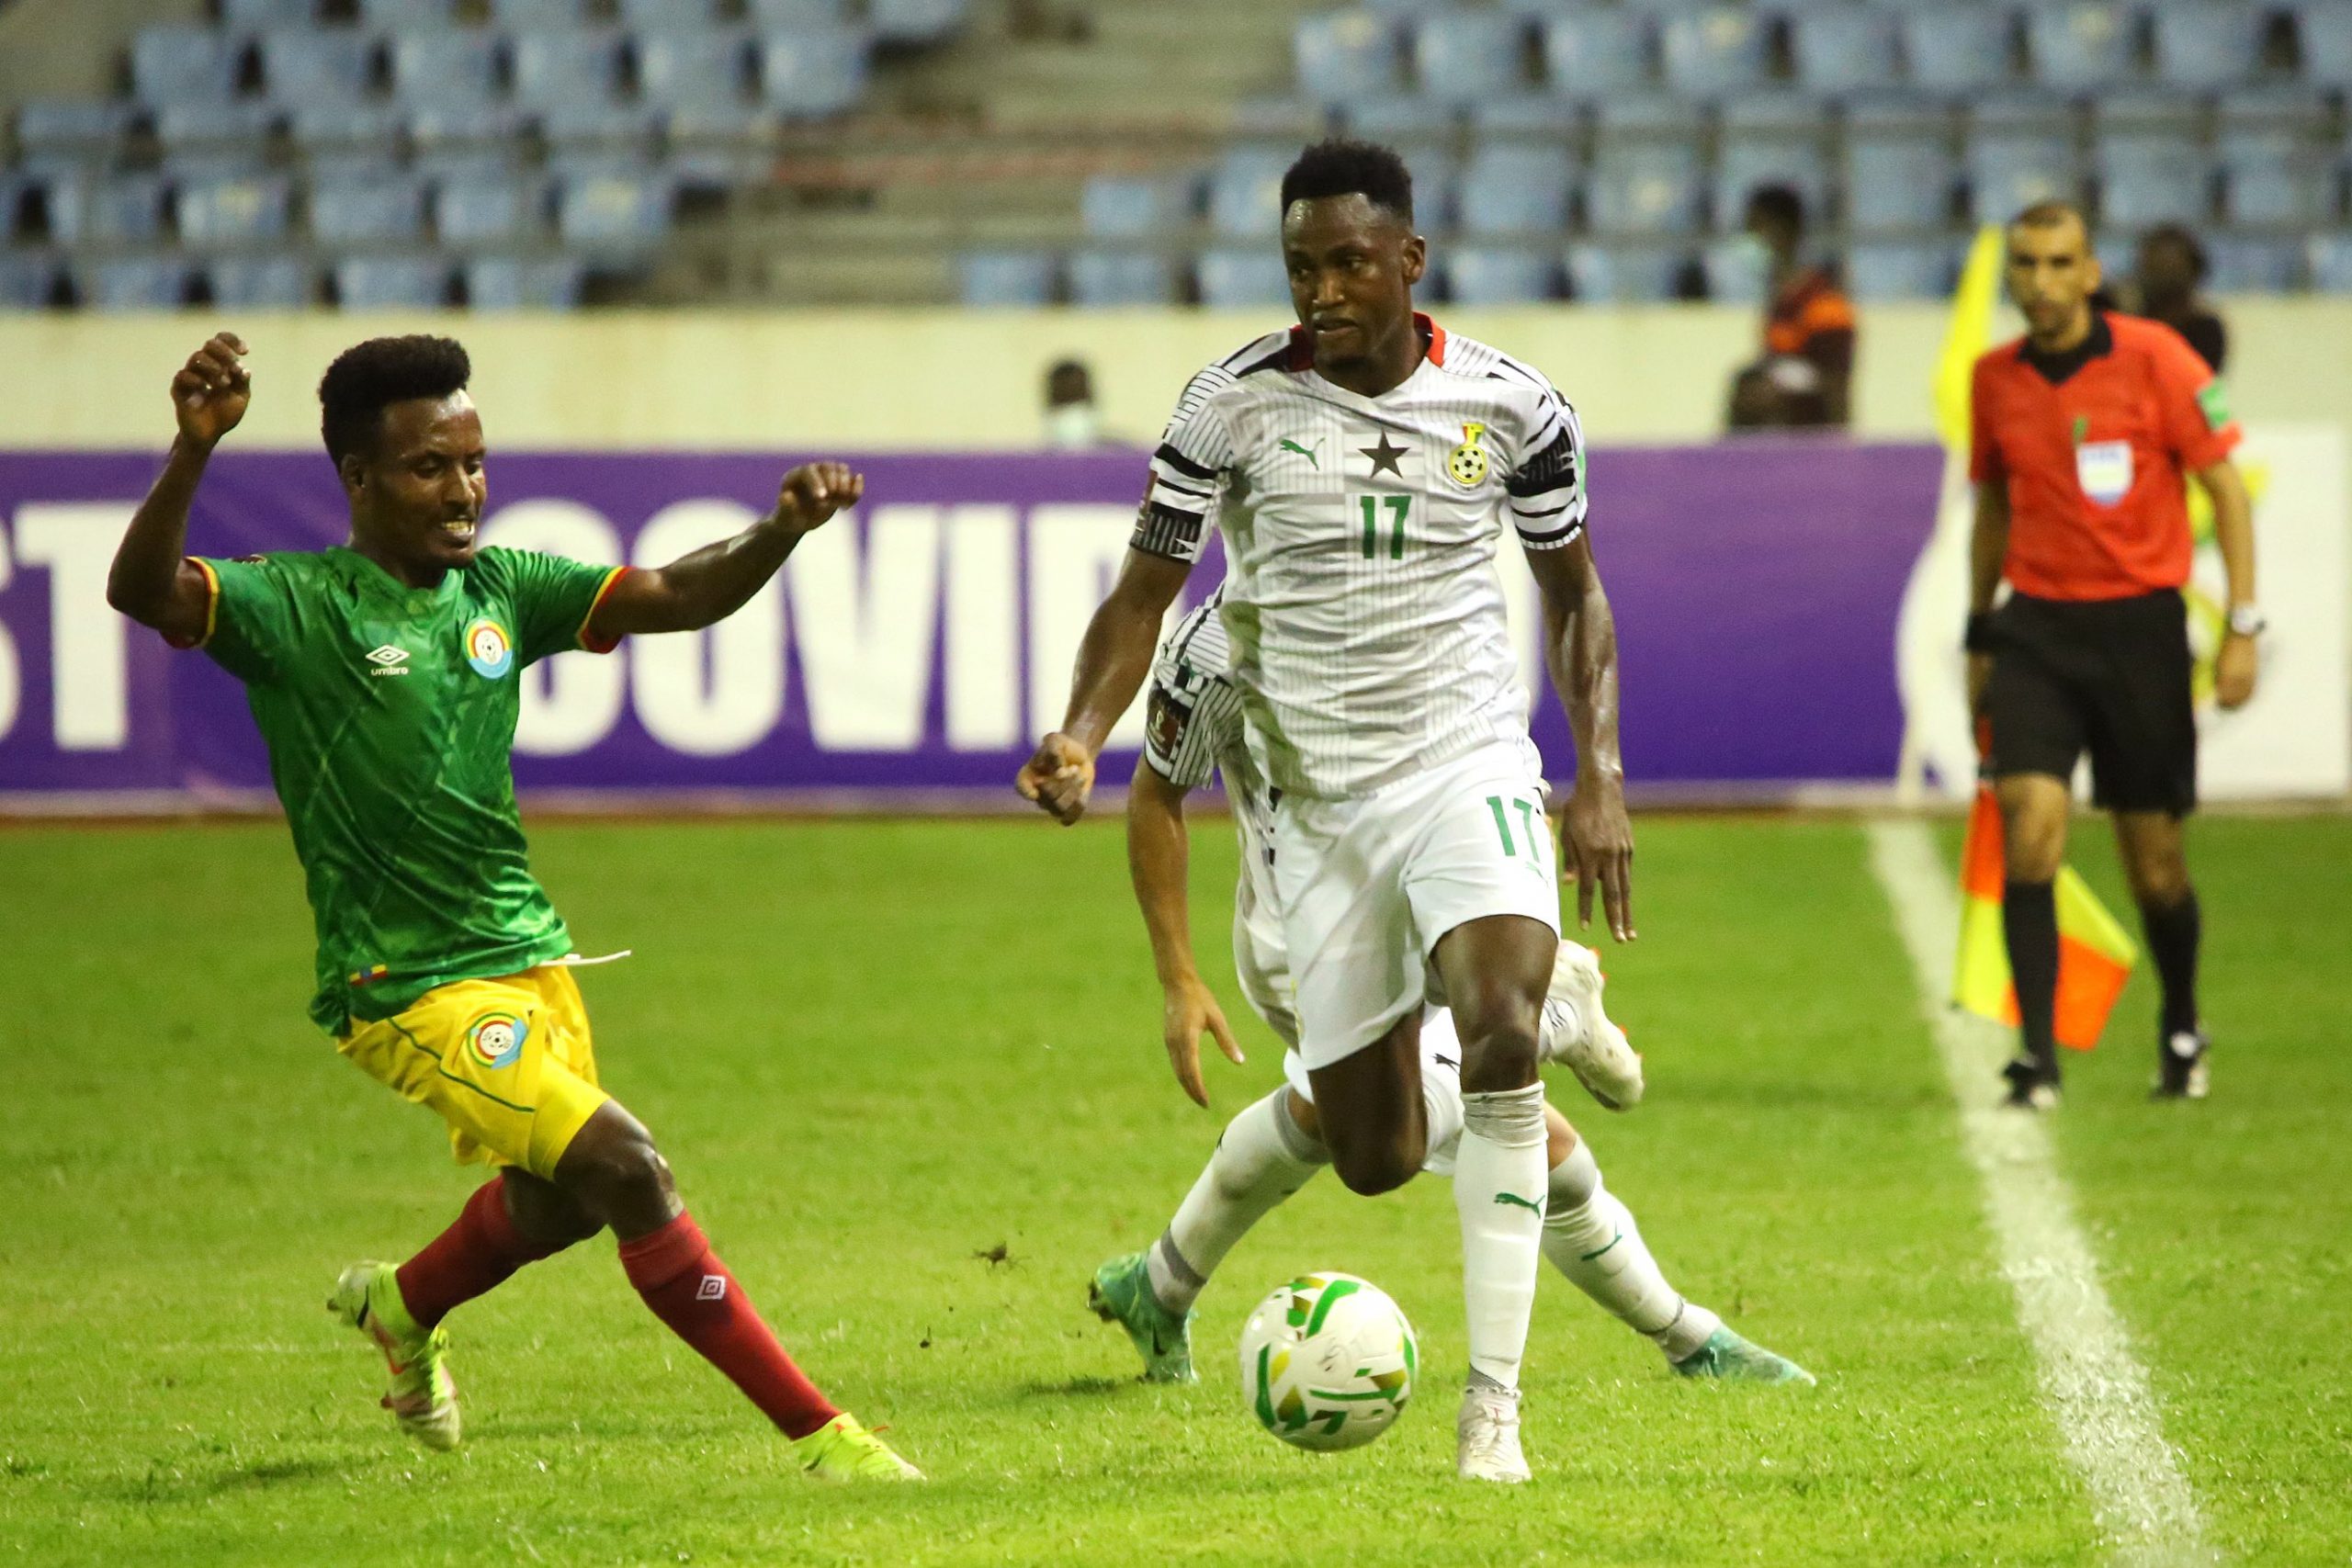 Soi-keo-nigeria-vs-ghana-0h-ngay-30-3-2022-2